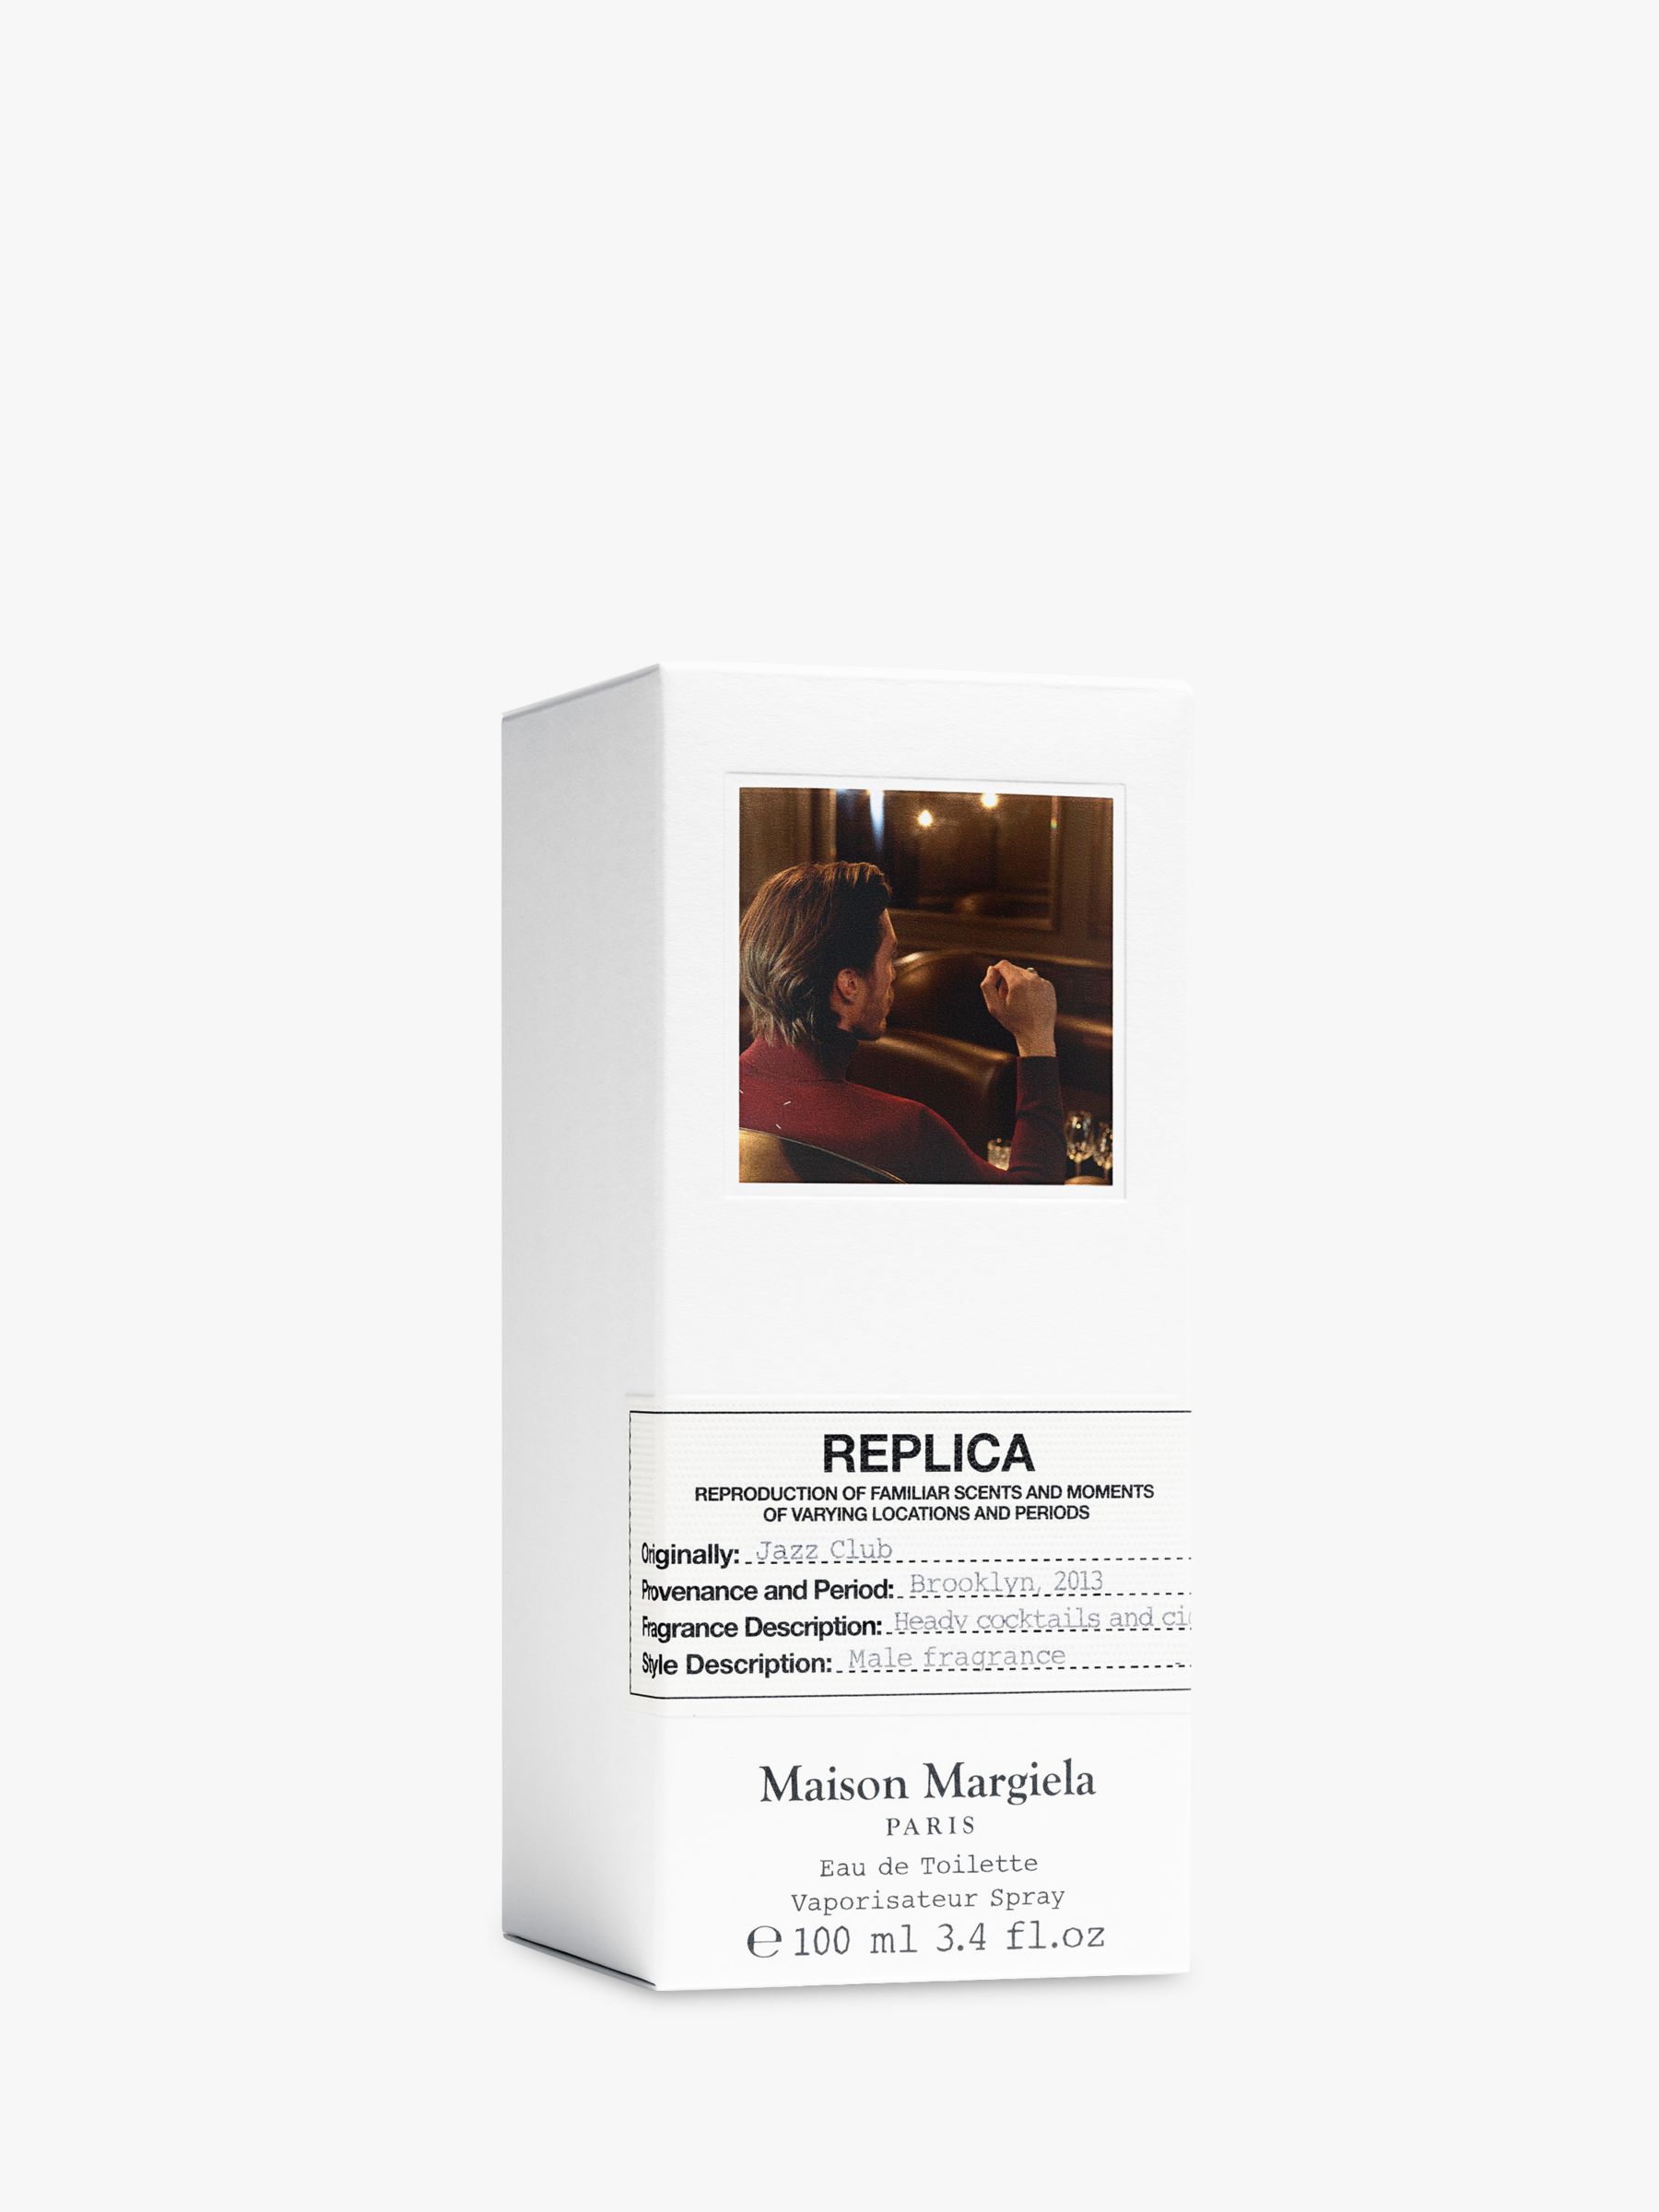 Maison Margiela Replica Jazz Club Eau de Toilette, 100ml